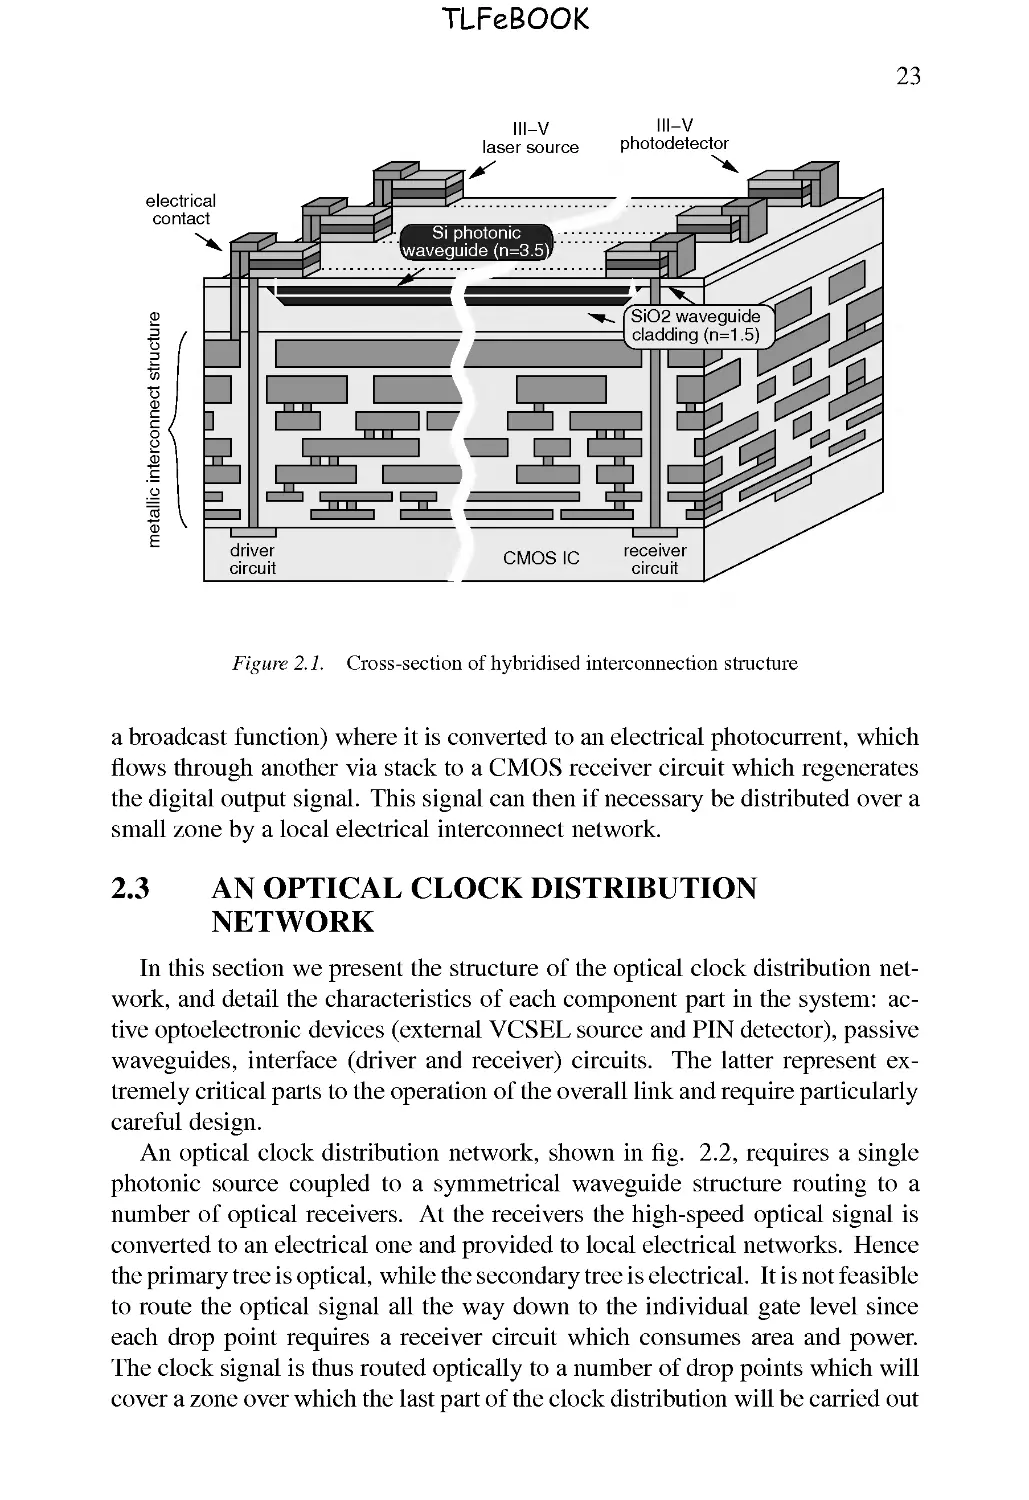 2.3 AN OPTICAL CLOCK DISTRIBUTION NETWORK